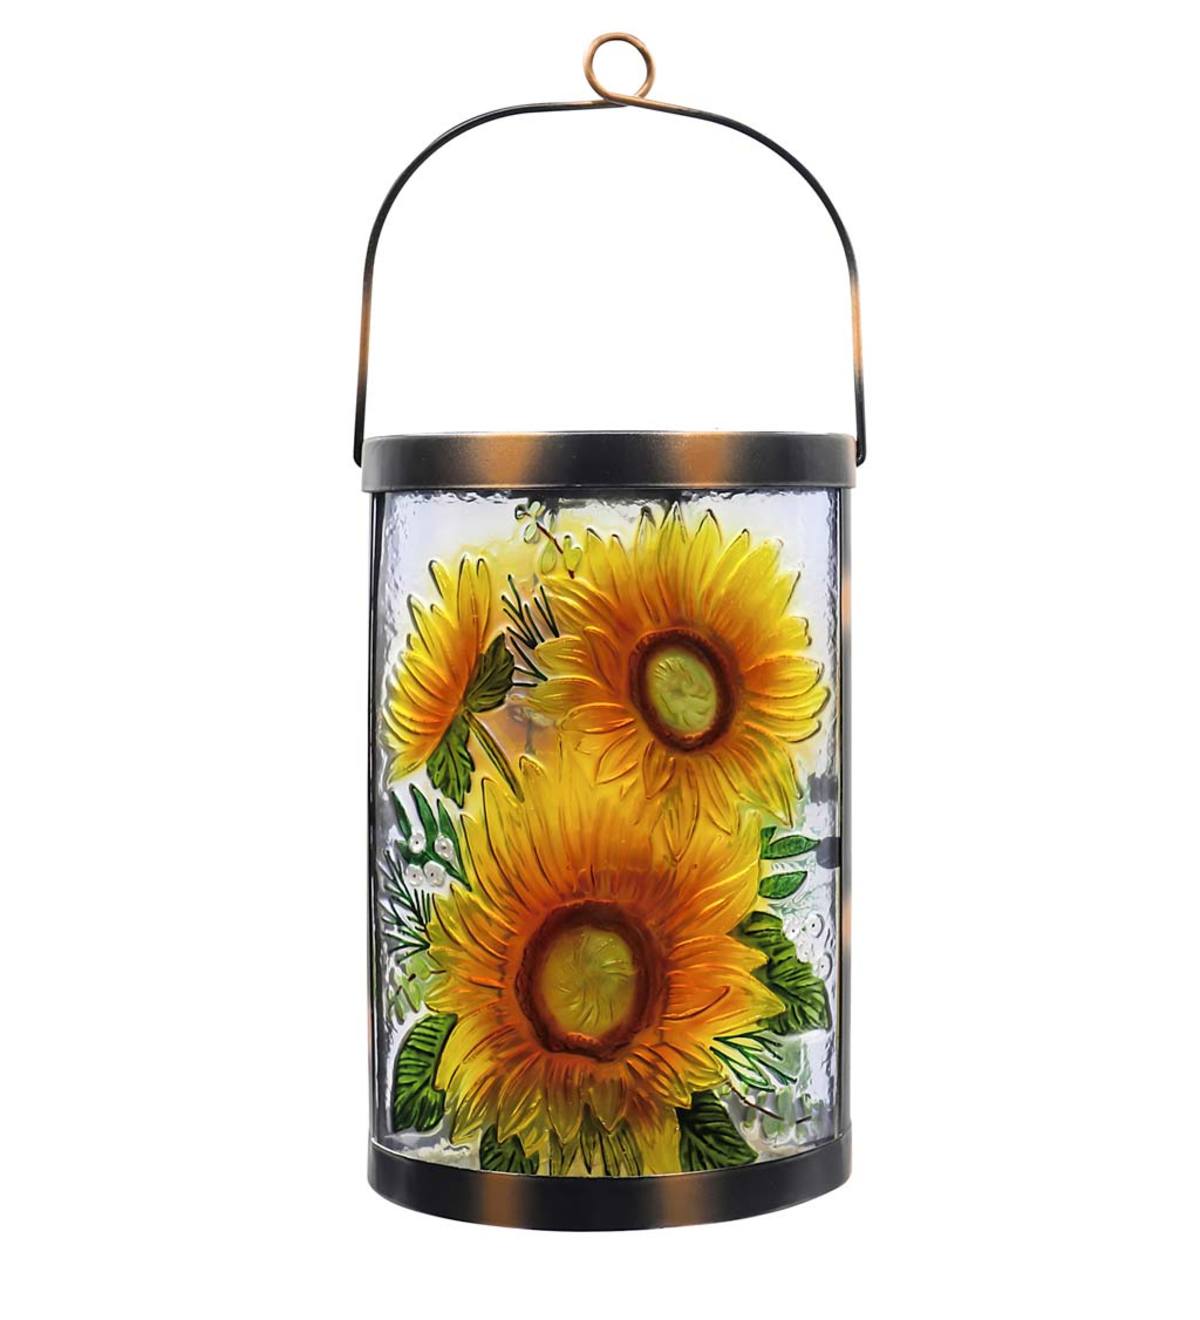 Harvest Sunflowers Solar Glass Lantern